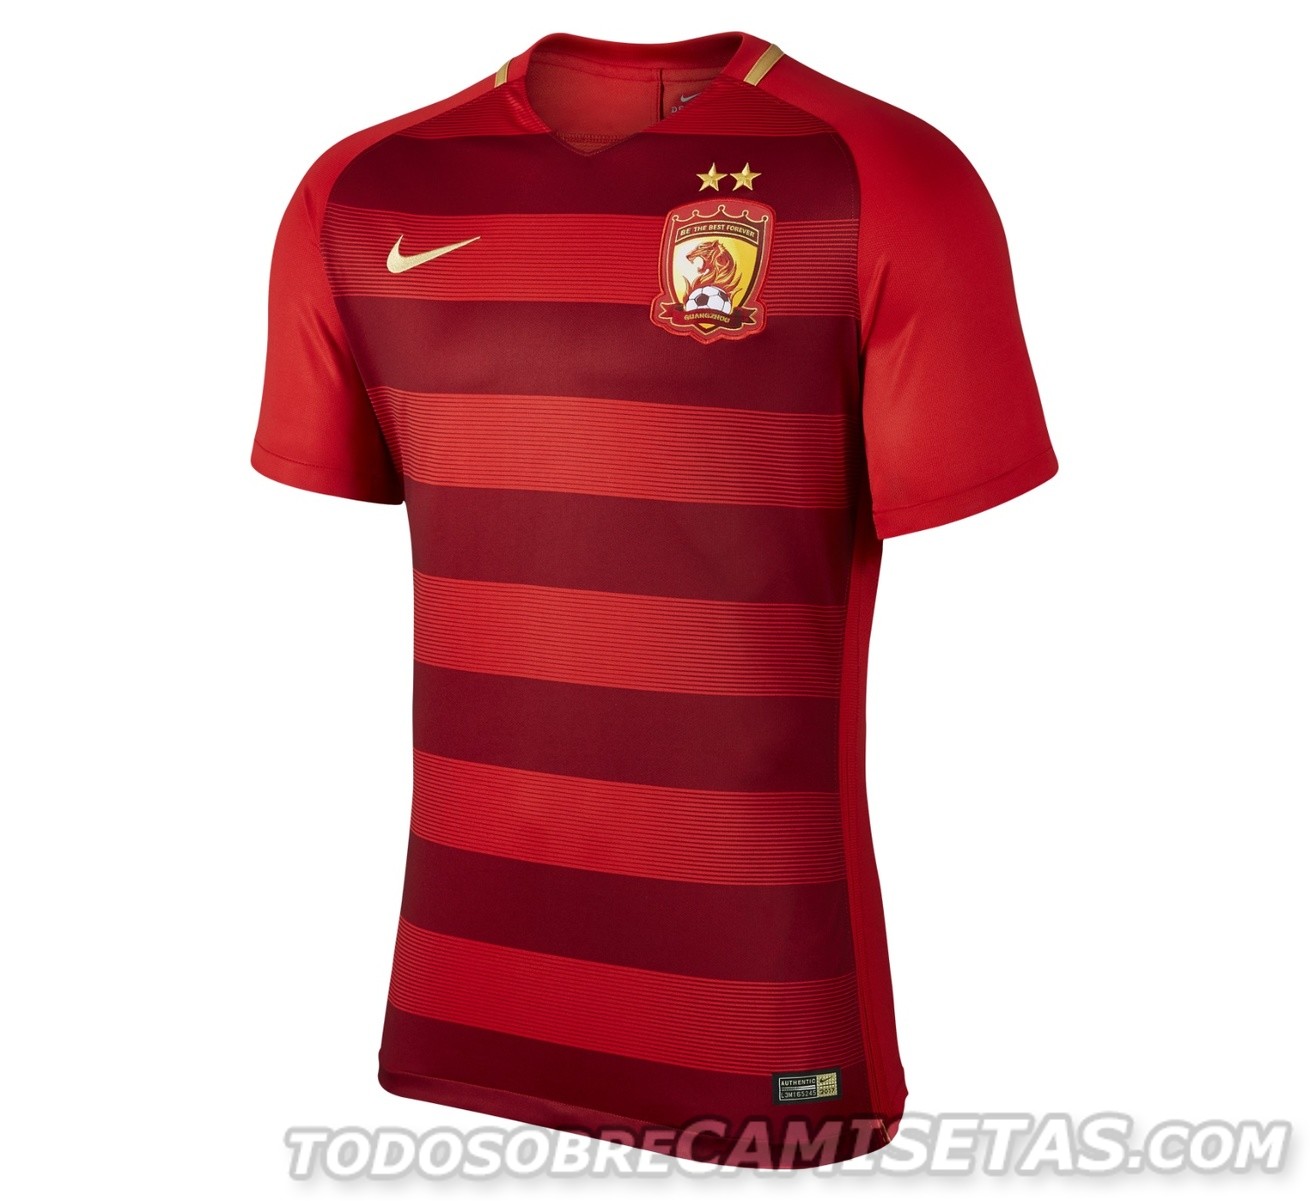 Guangzhou Evergrande Nike 2017 Home Kit